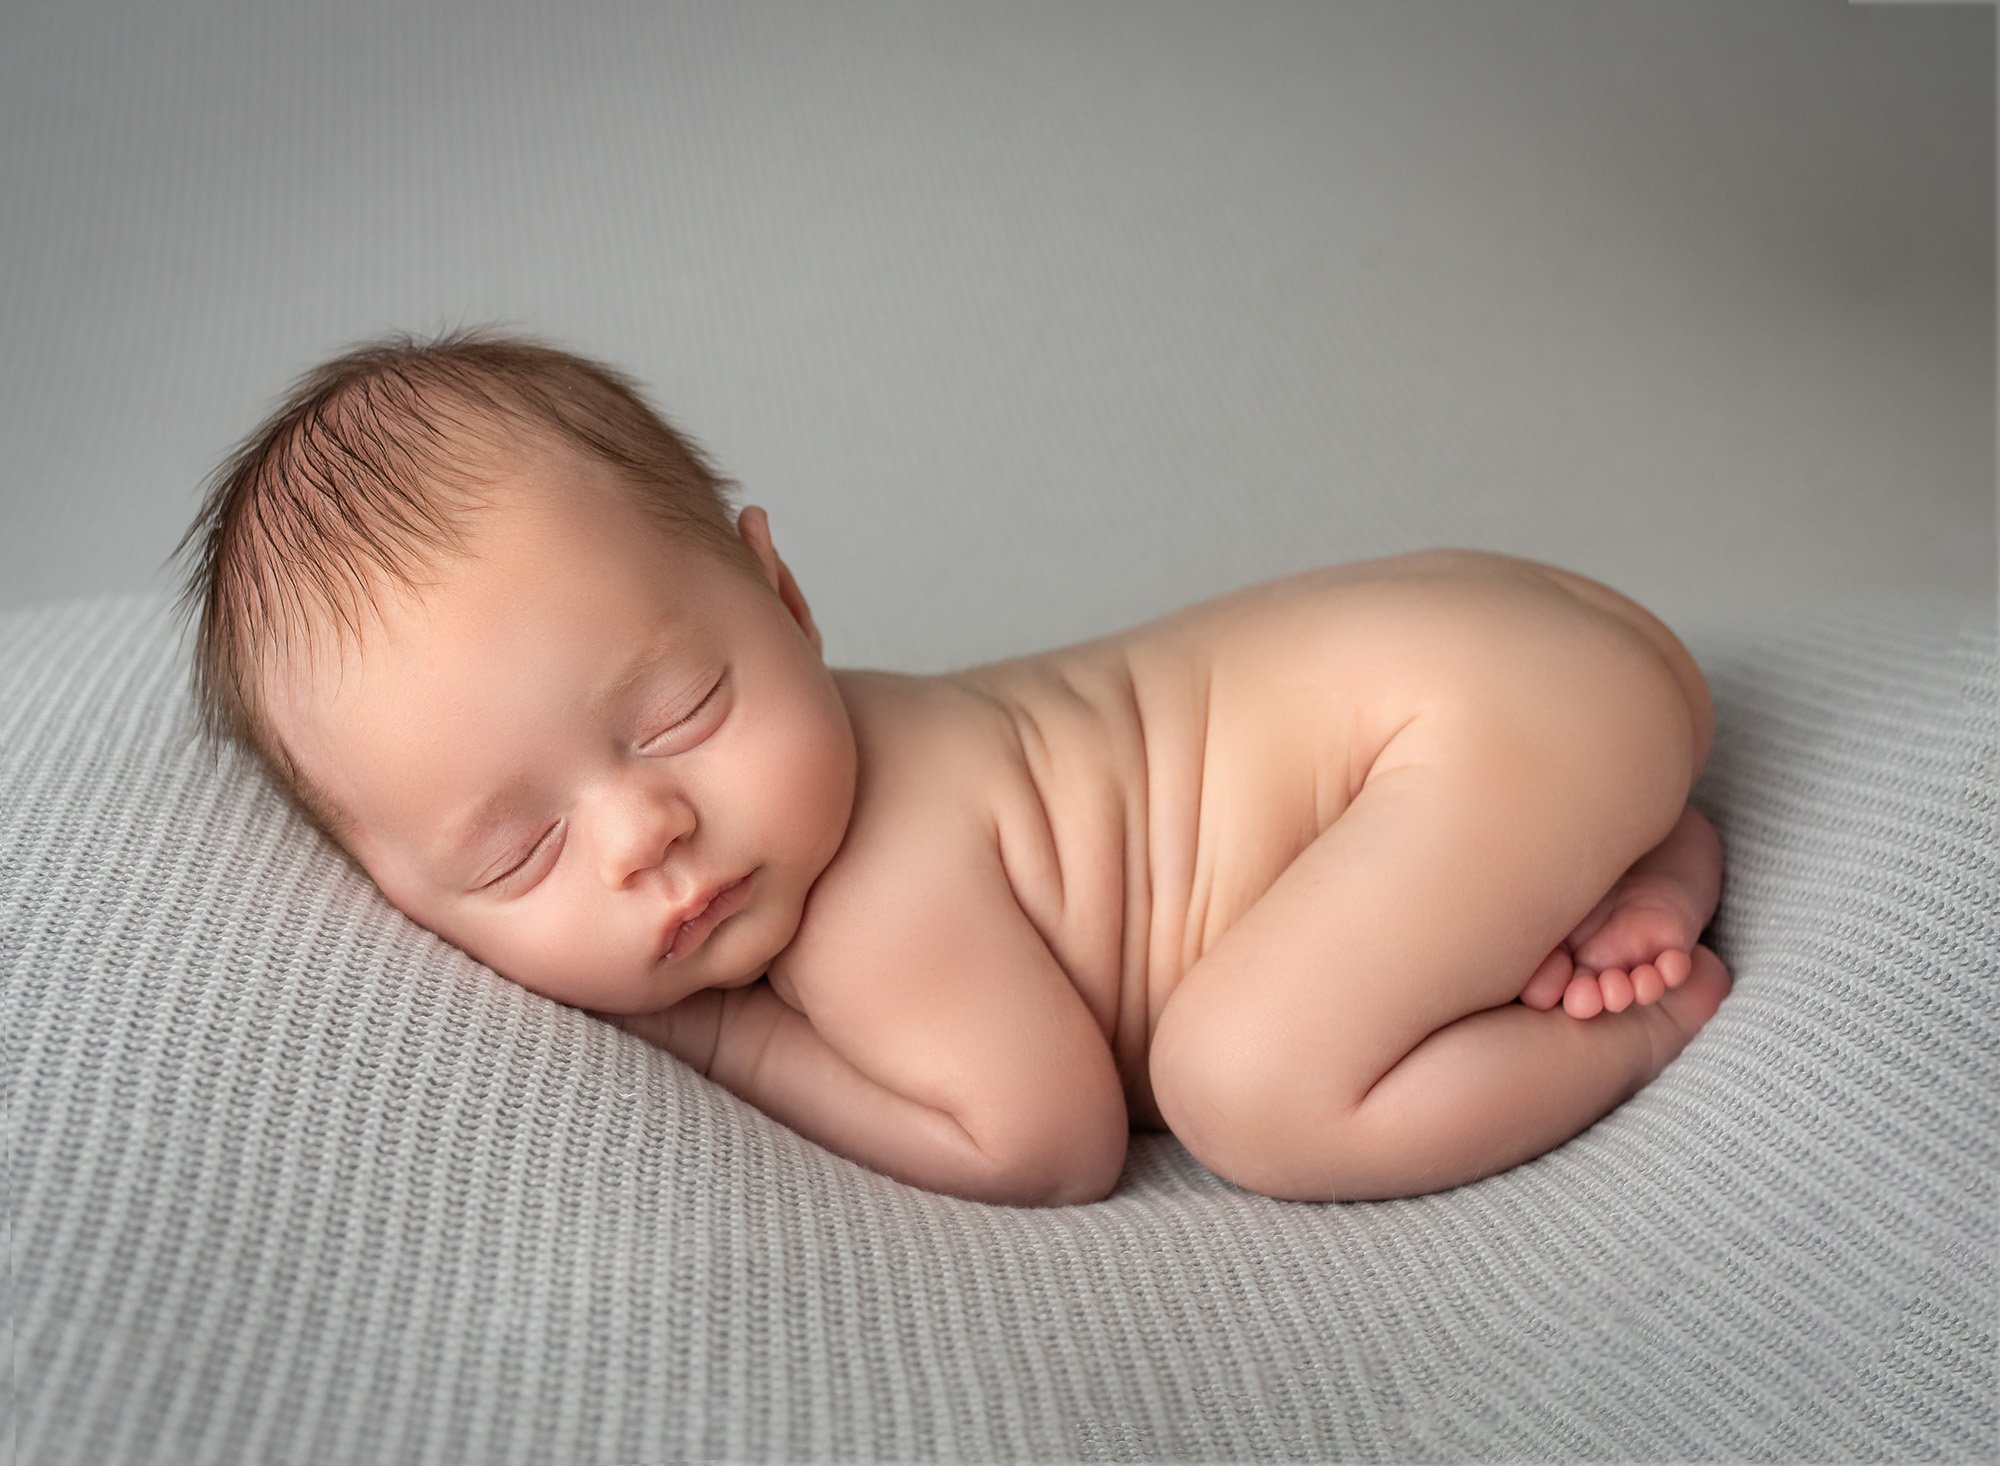 newborn baby boy sound asleep naked on white blanket with grey background